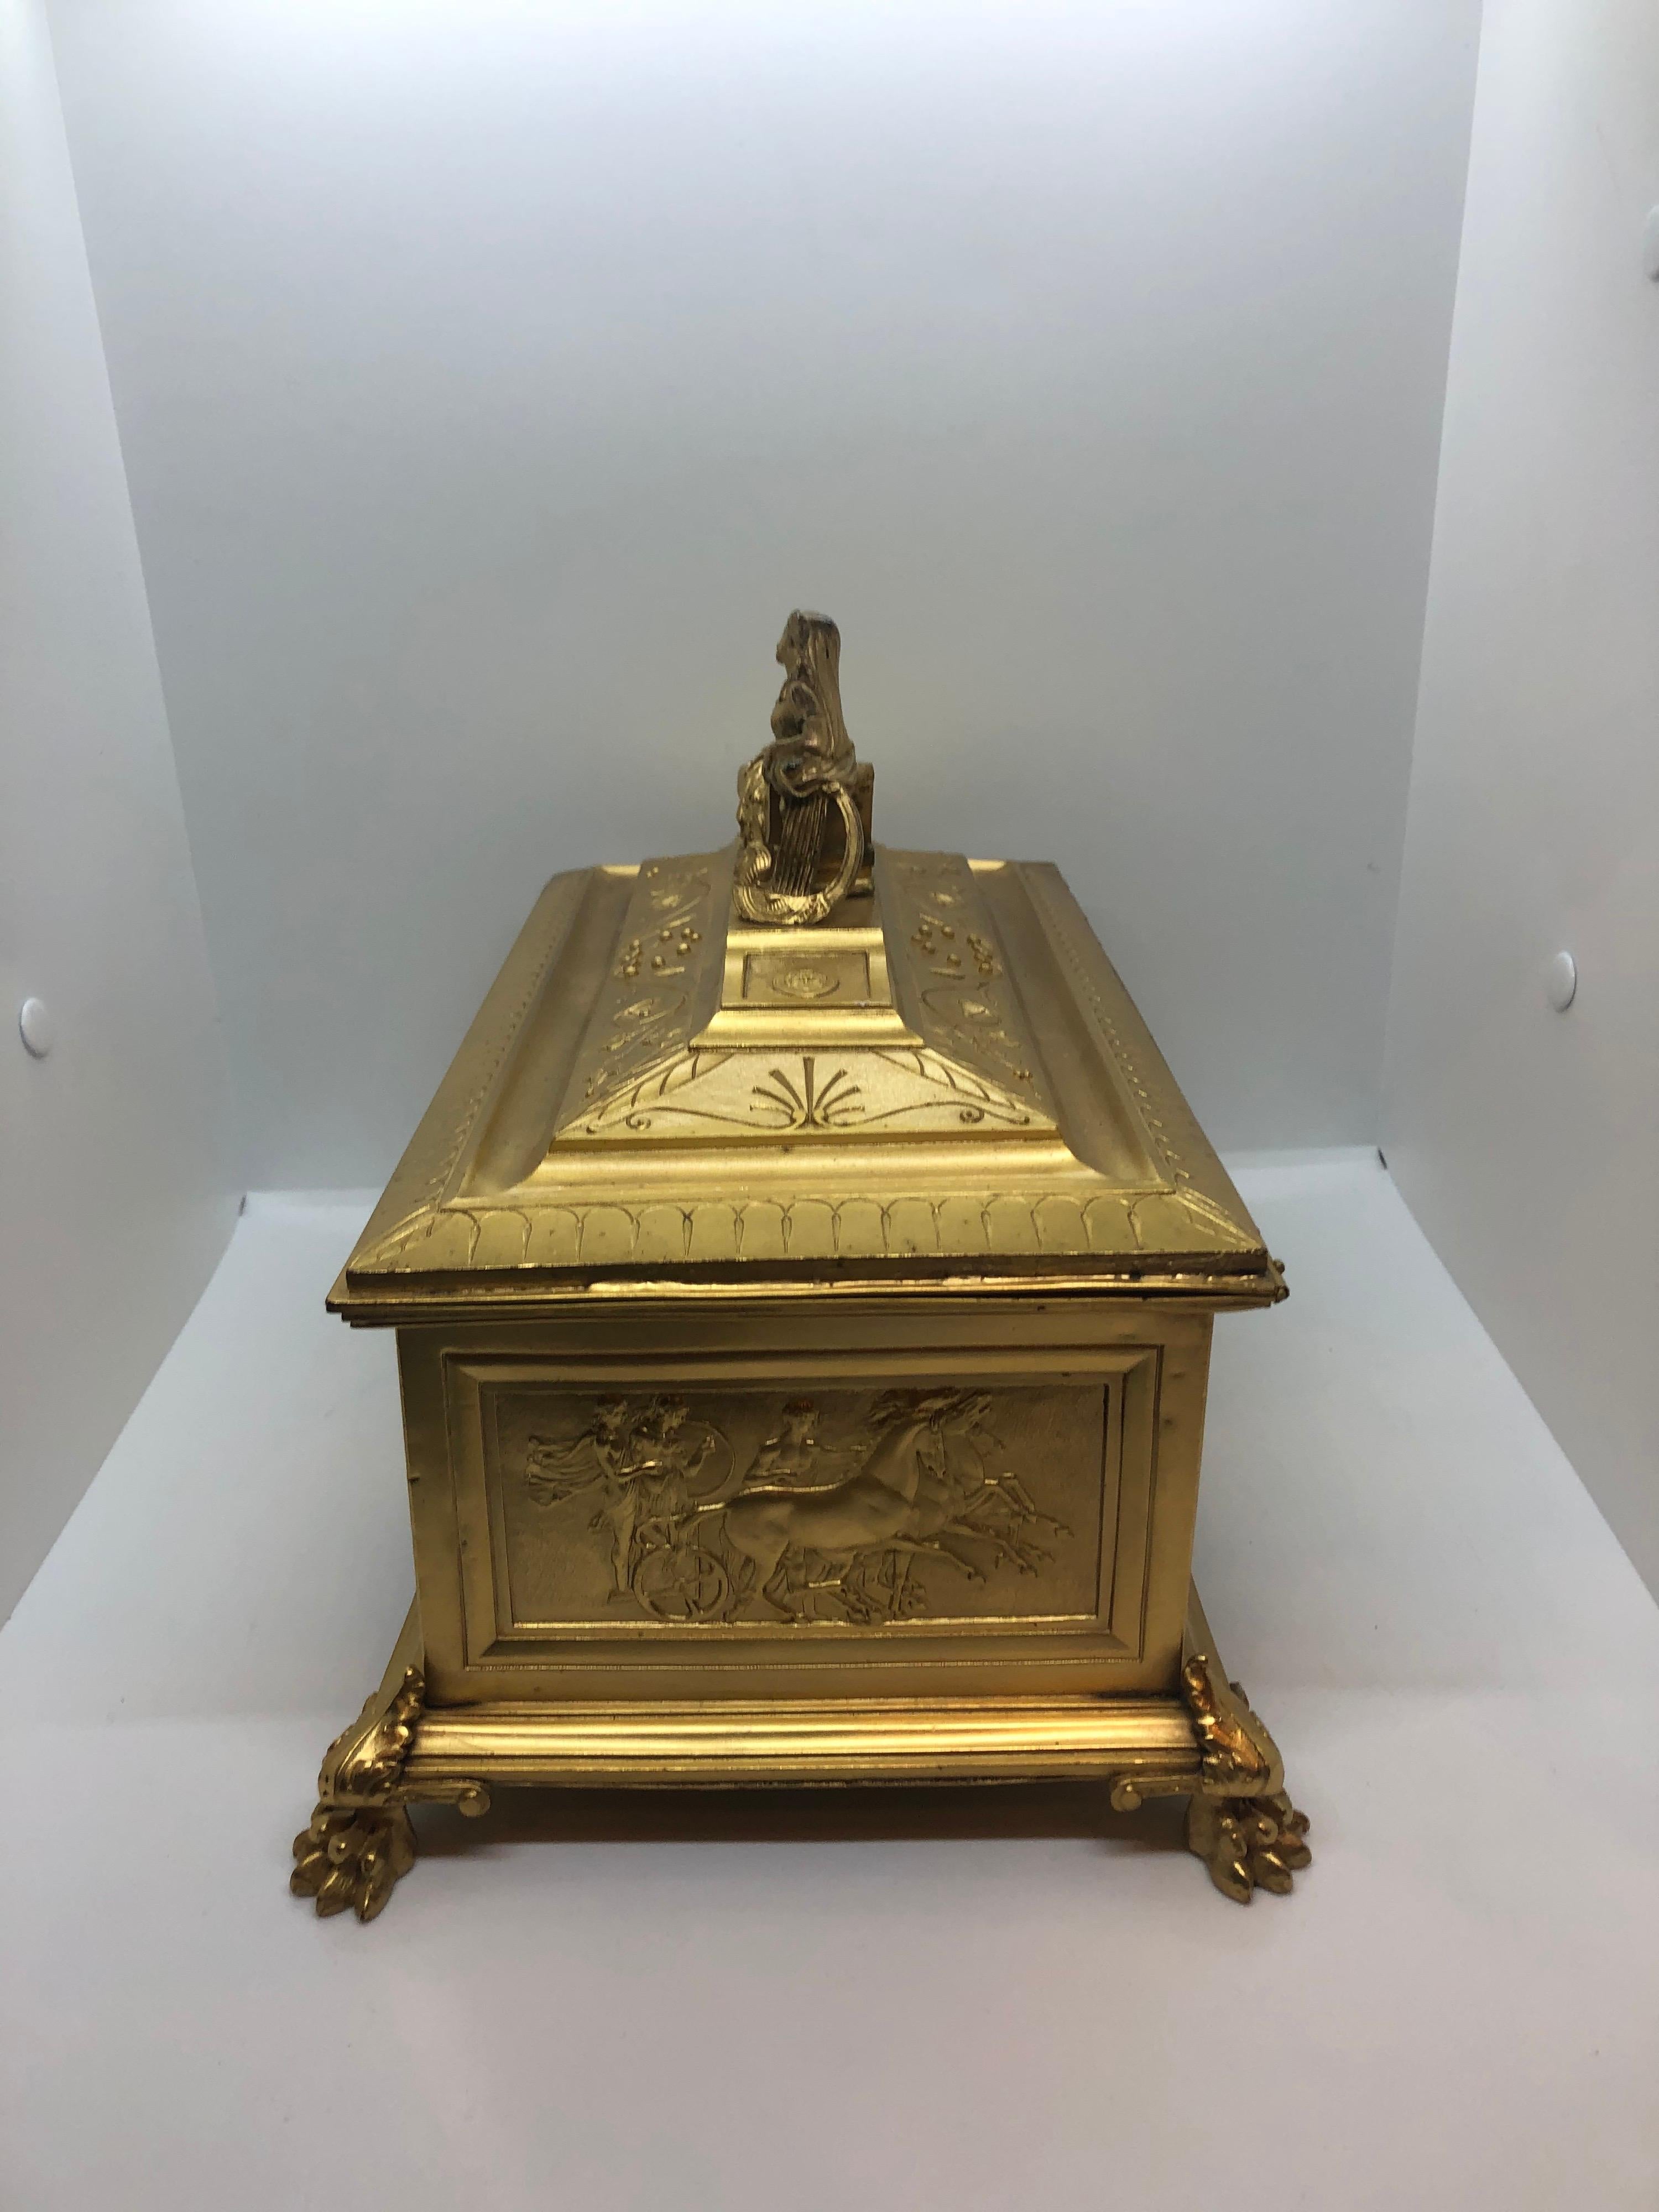 19th century gilt bronze box signed TAHAN En De LEMPERIIR.